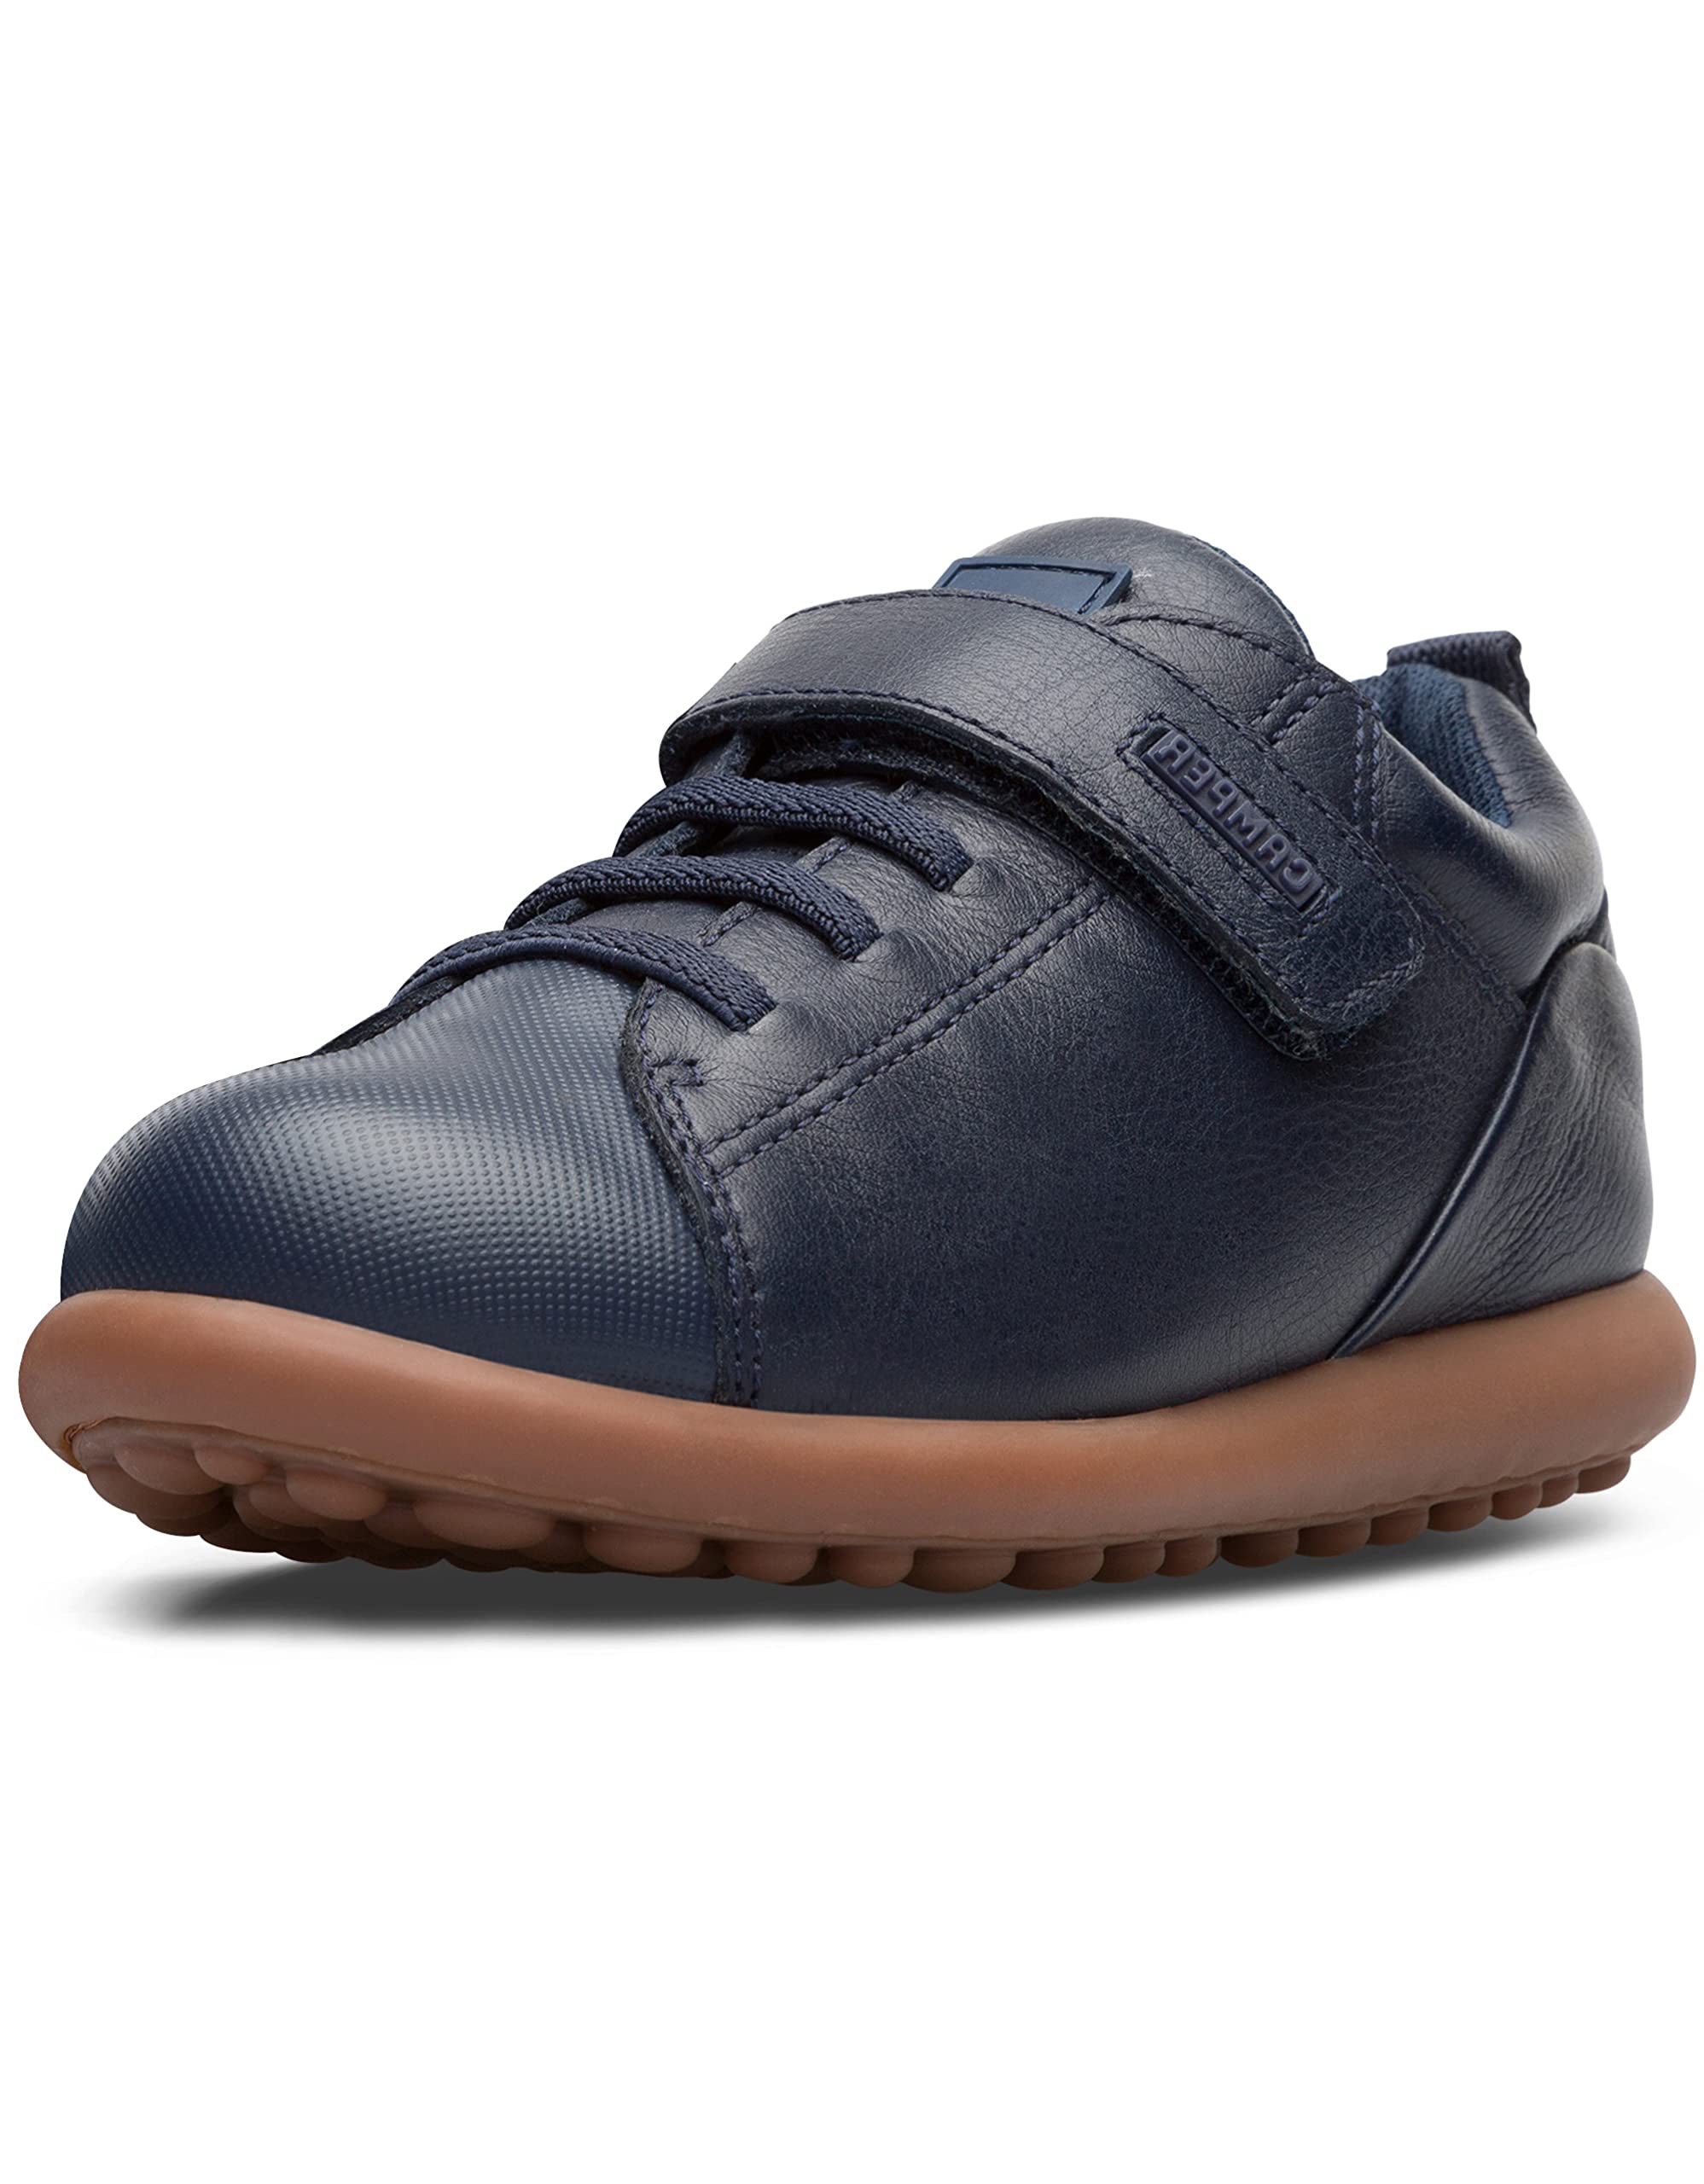 CAMPER Jungen Pelotas Ariel Kids-k800316 Sneaker, Blau, 38 EU